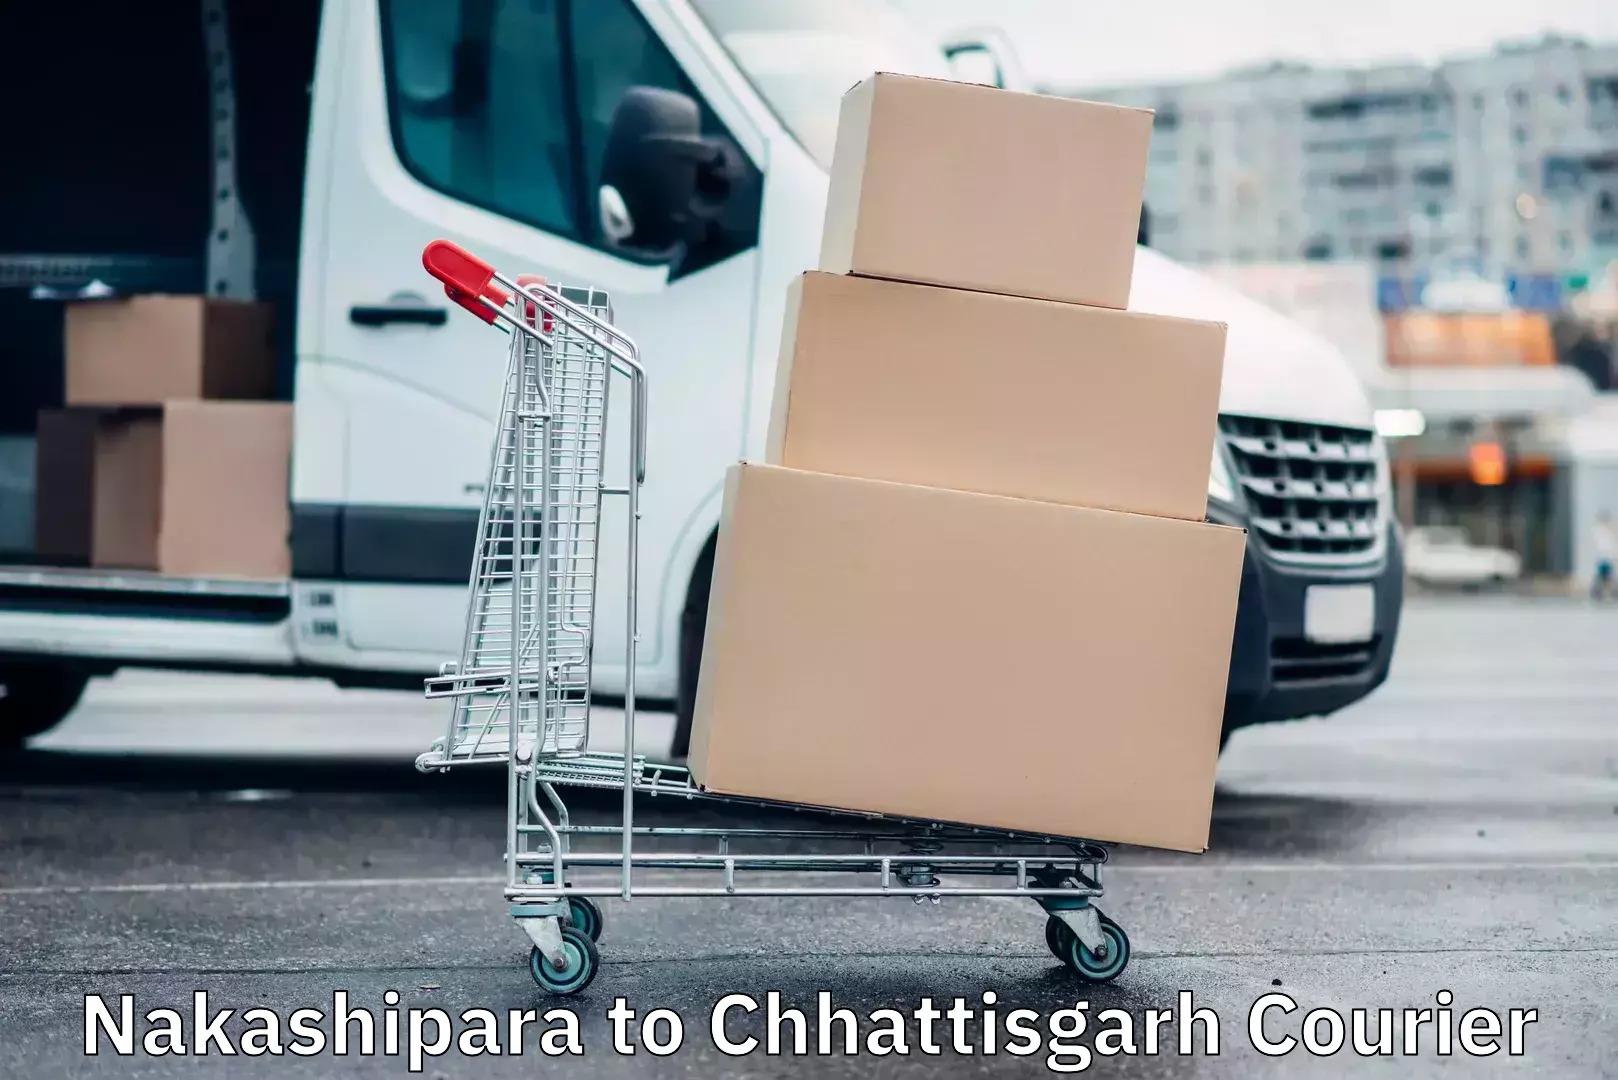 Nationwide courier service Nakashipara to Chhattisgarh